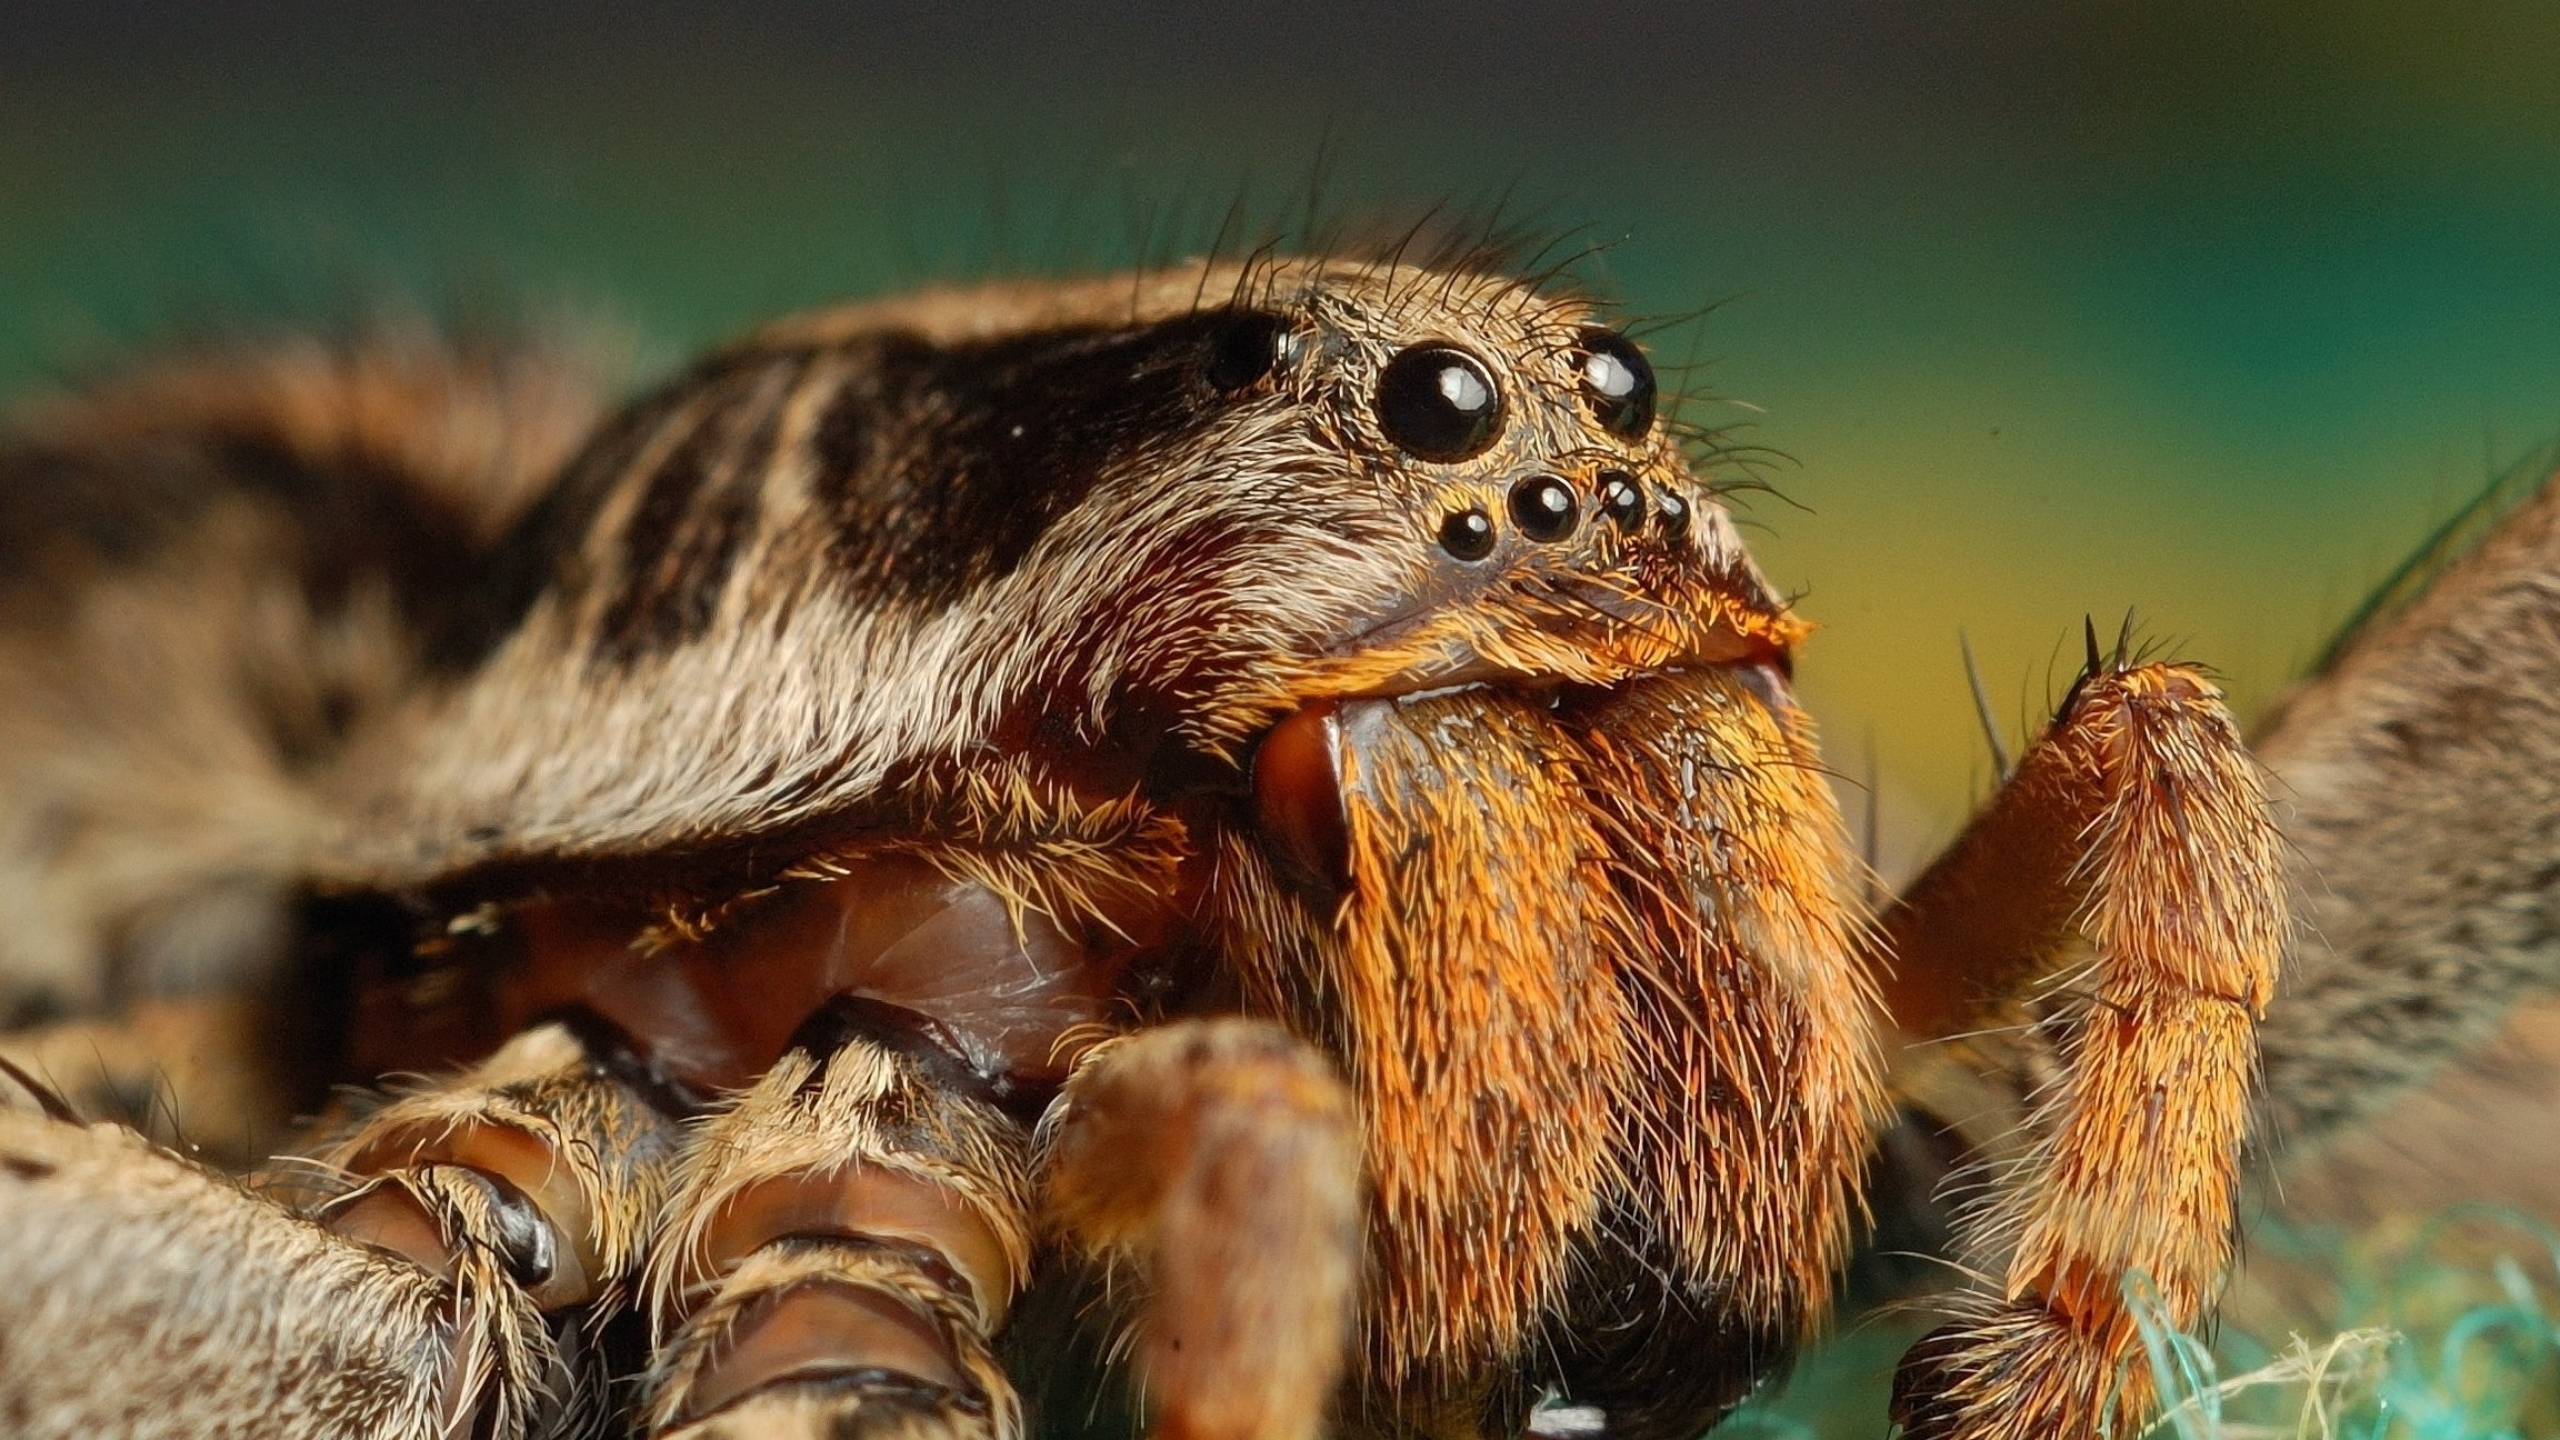 Tarantula wallpapers, High-definition images, Stunning arachnids, Wallpaper-worthy, 2560x1440 HD Desktop